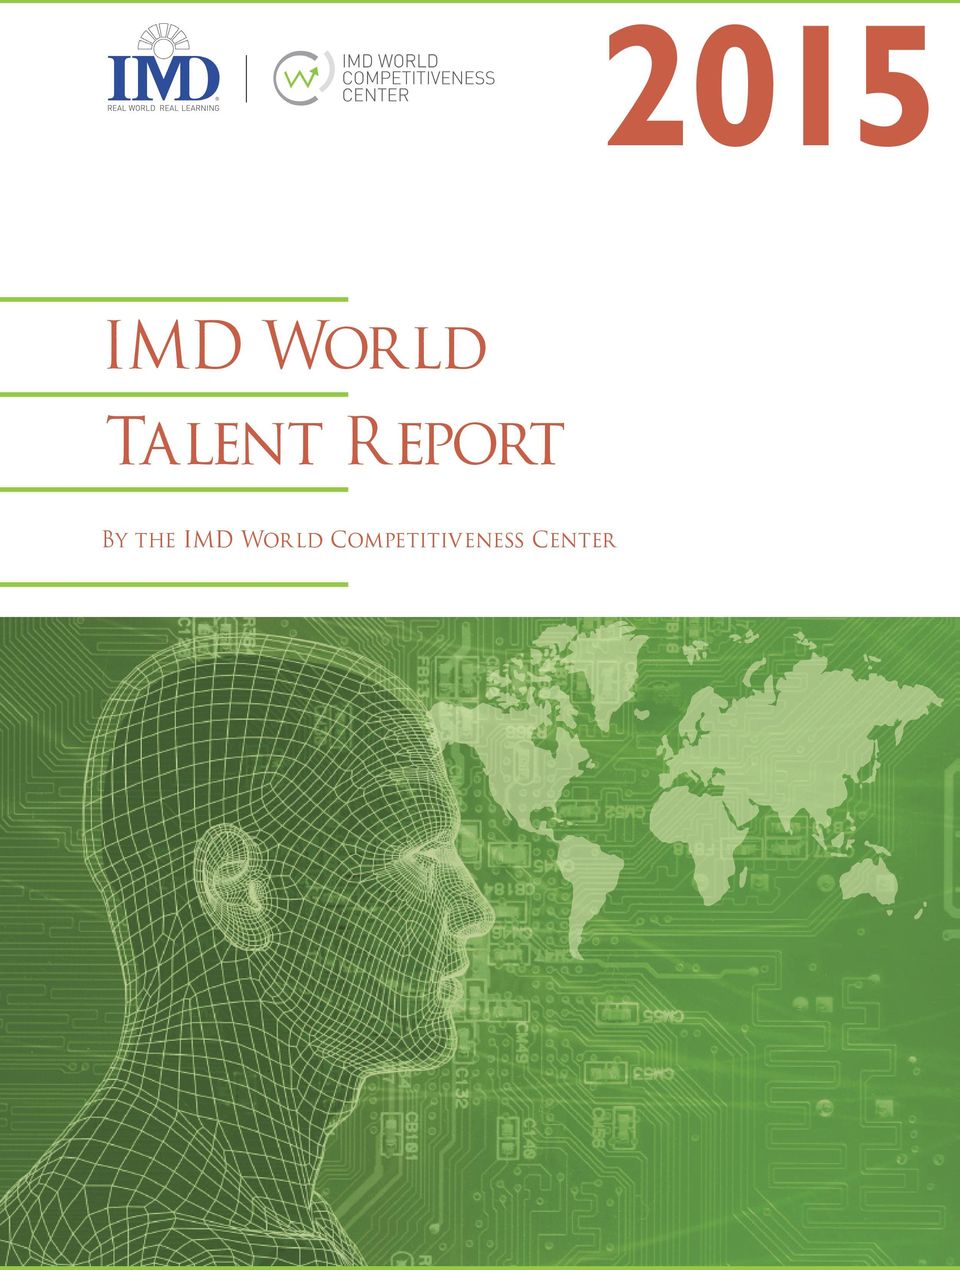 the IMD World